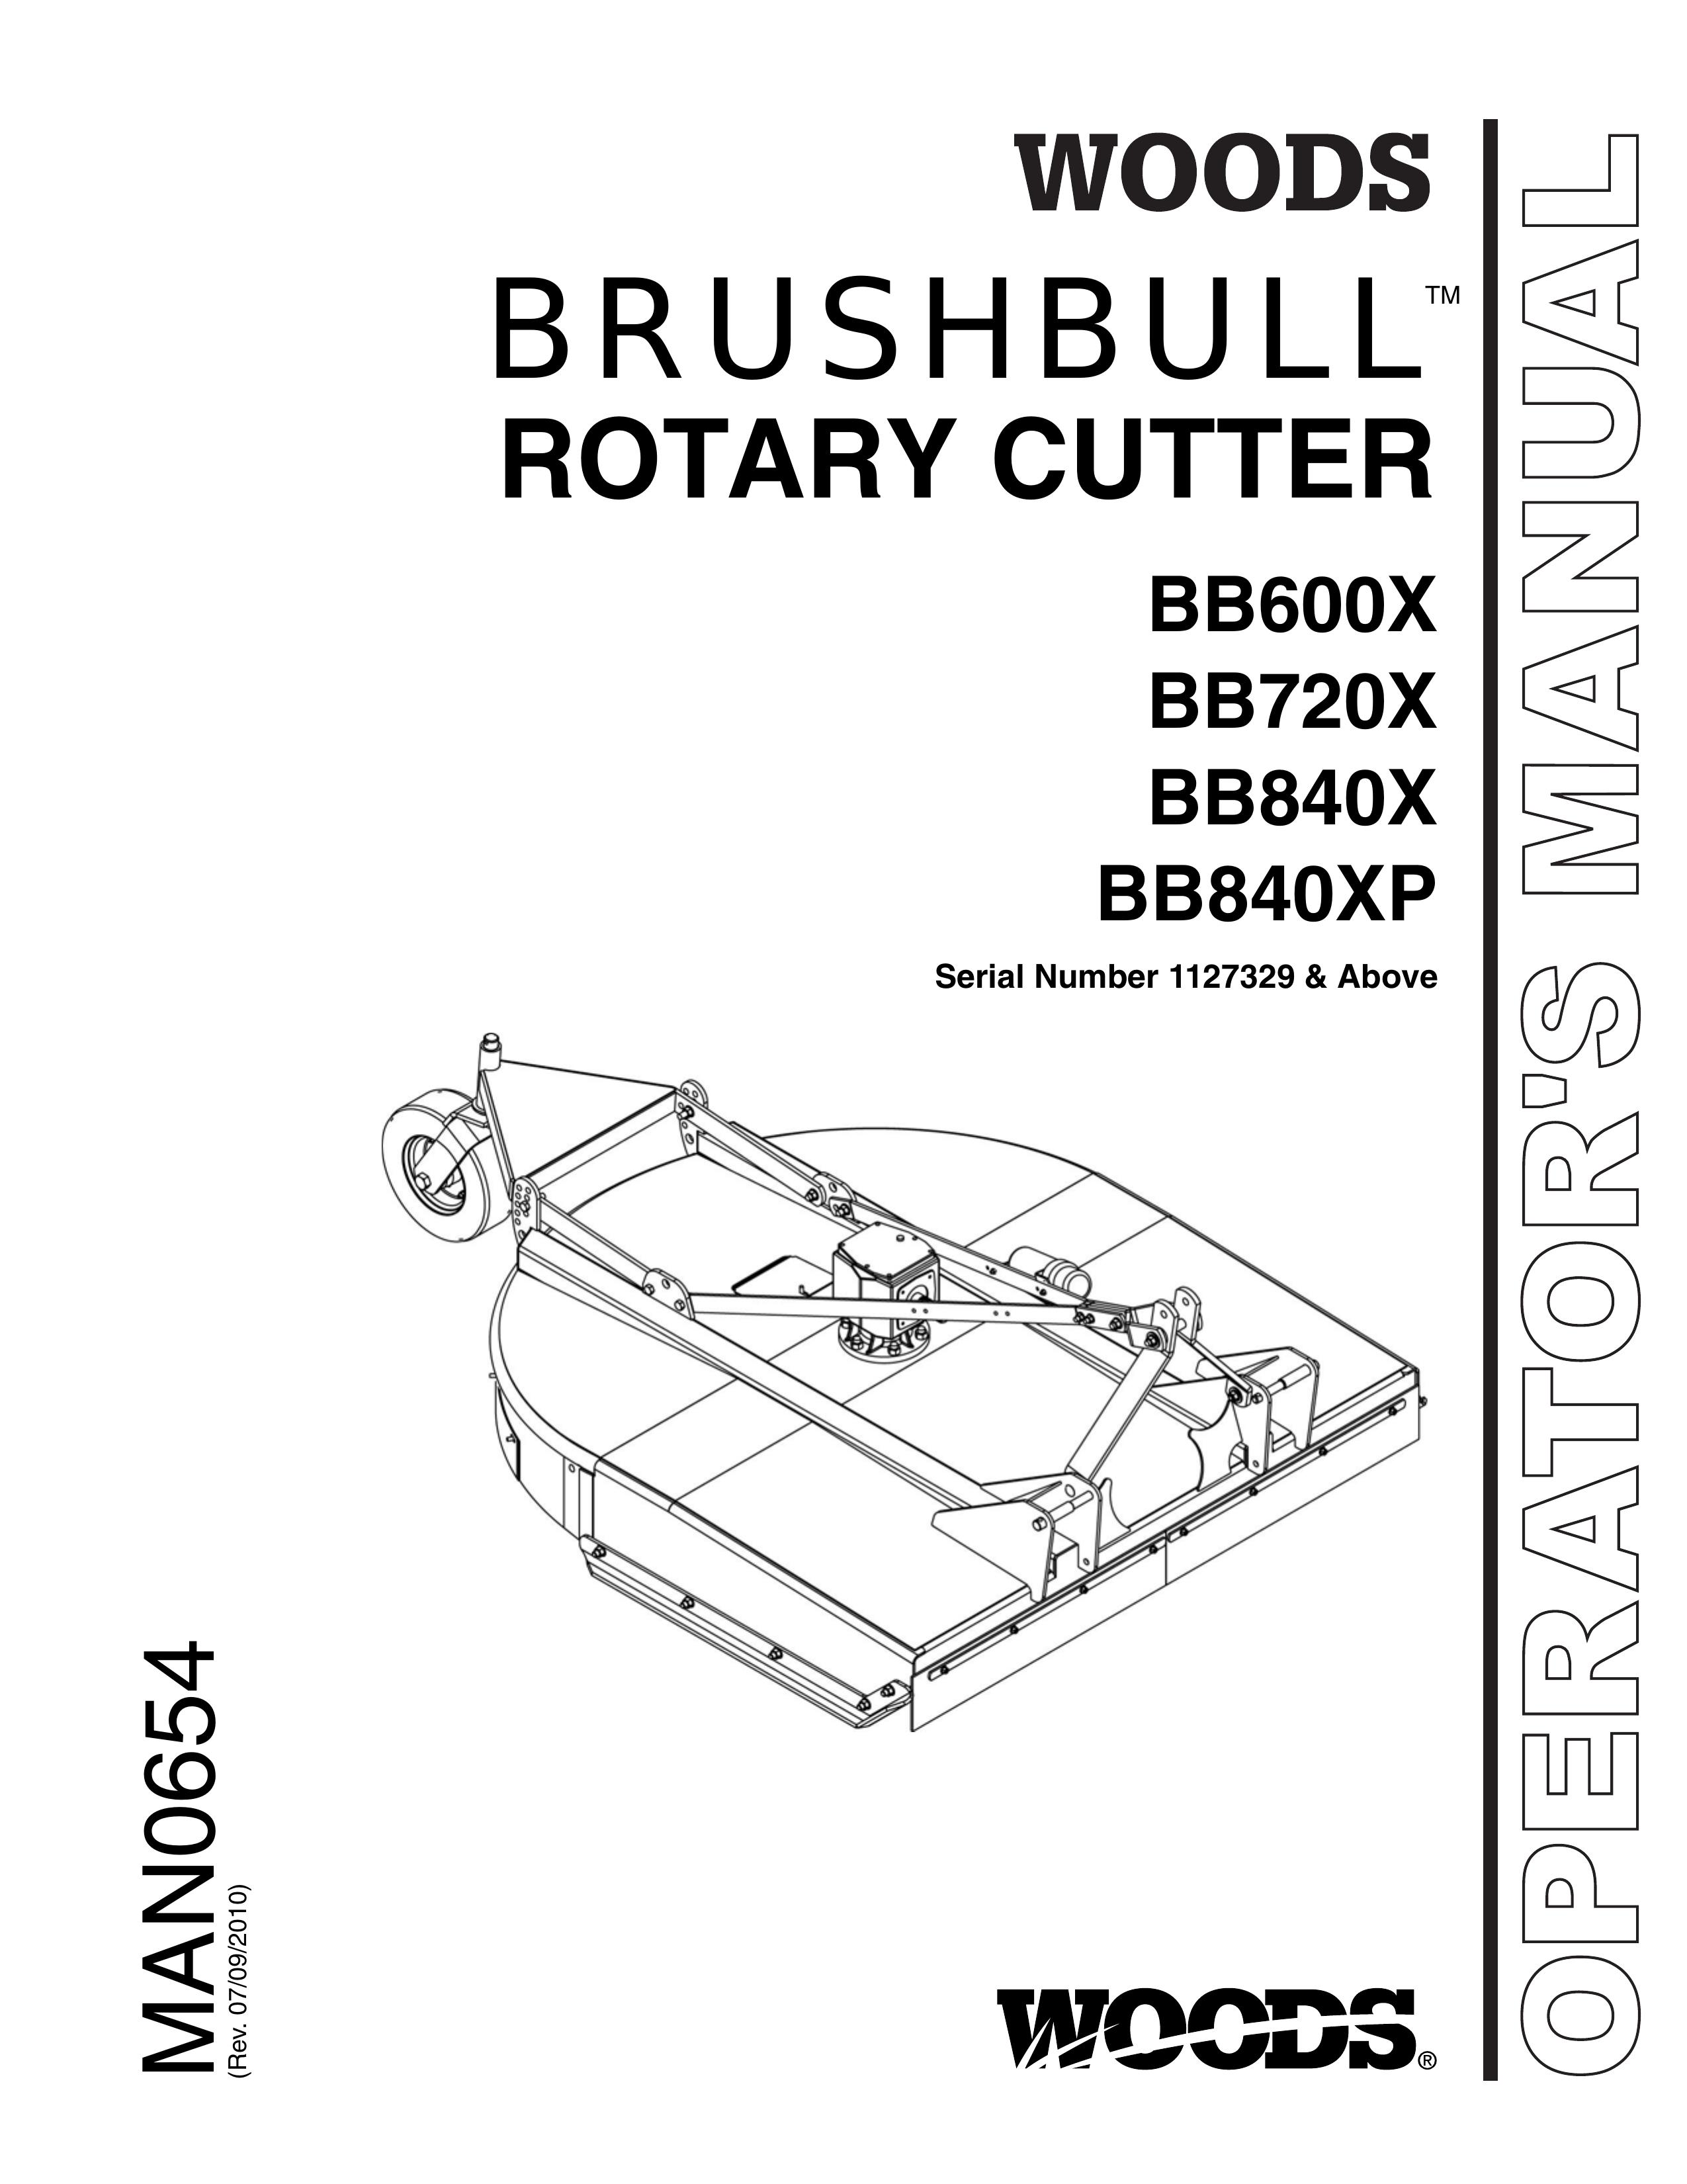 Woods Equipment BB840X Brush Cutter User Manual